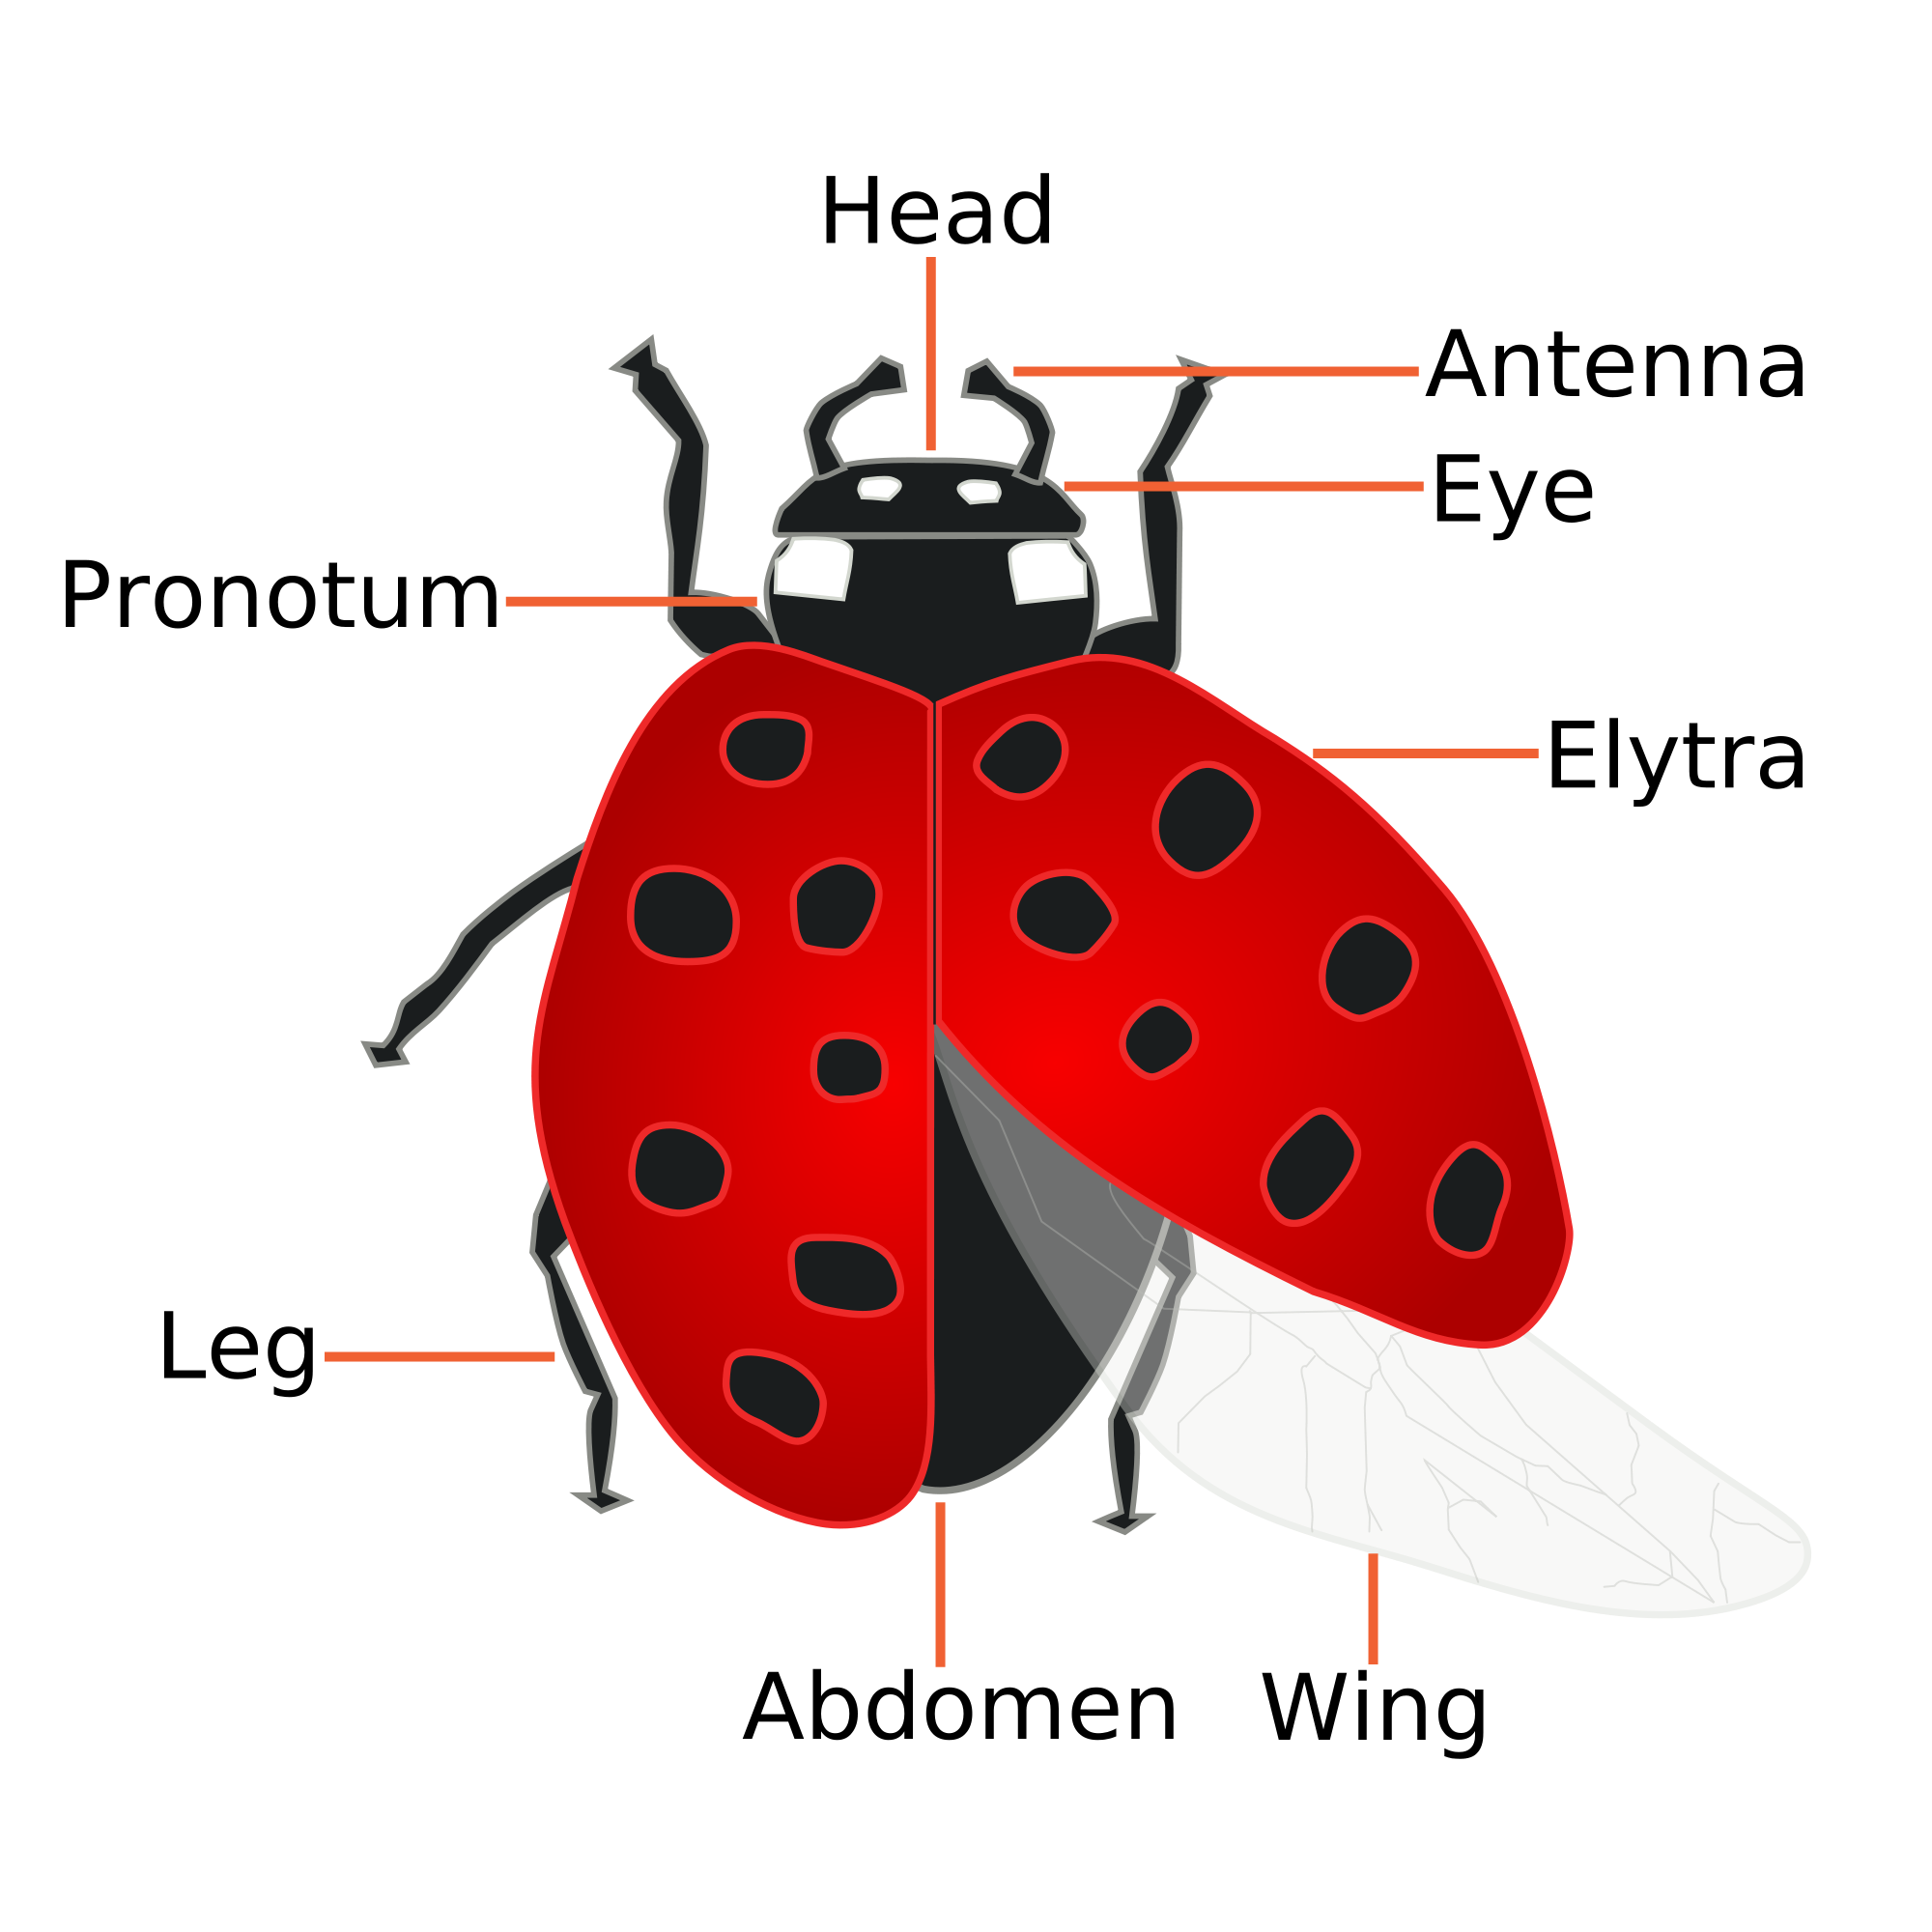 Lady bug life cycle | scienceisfun